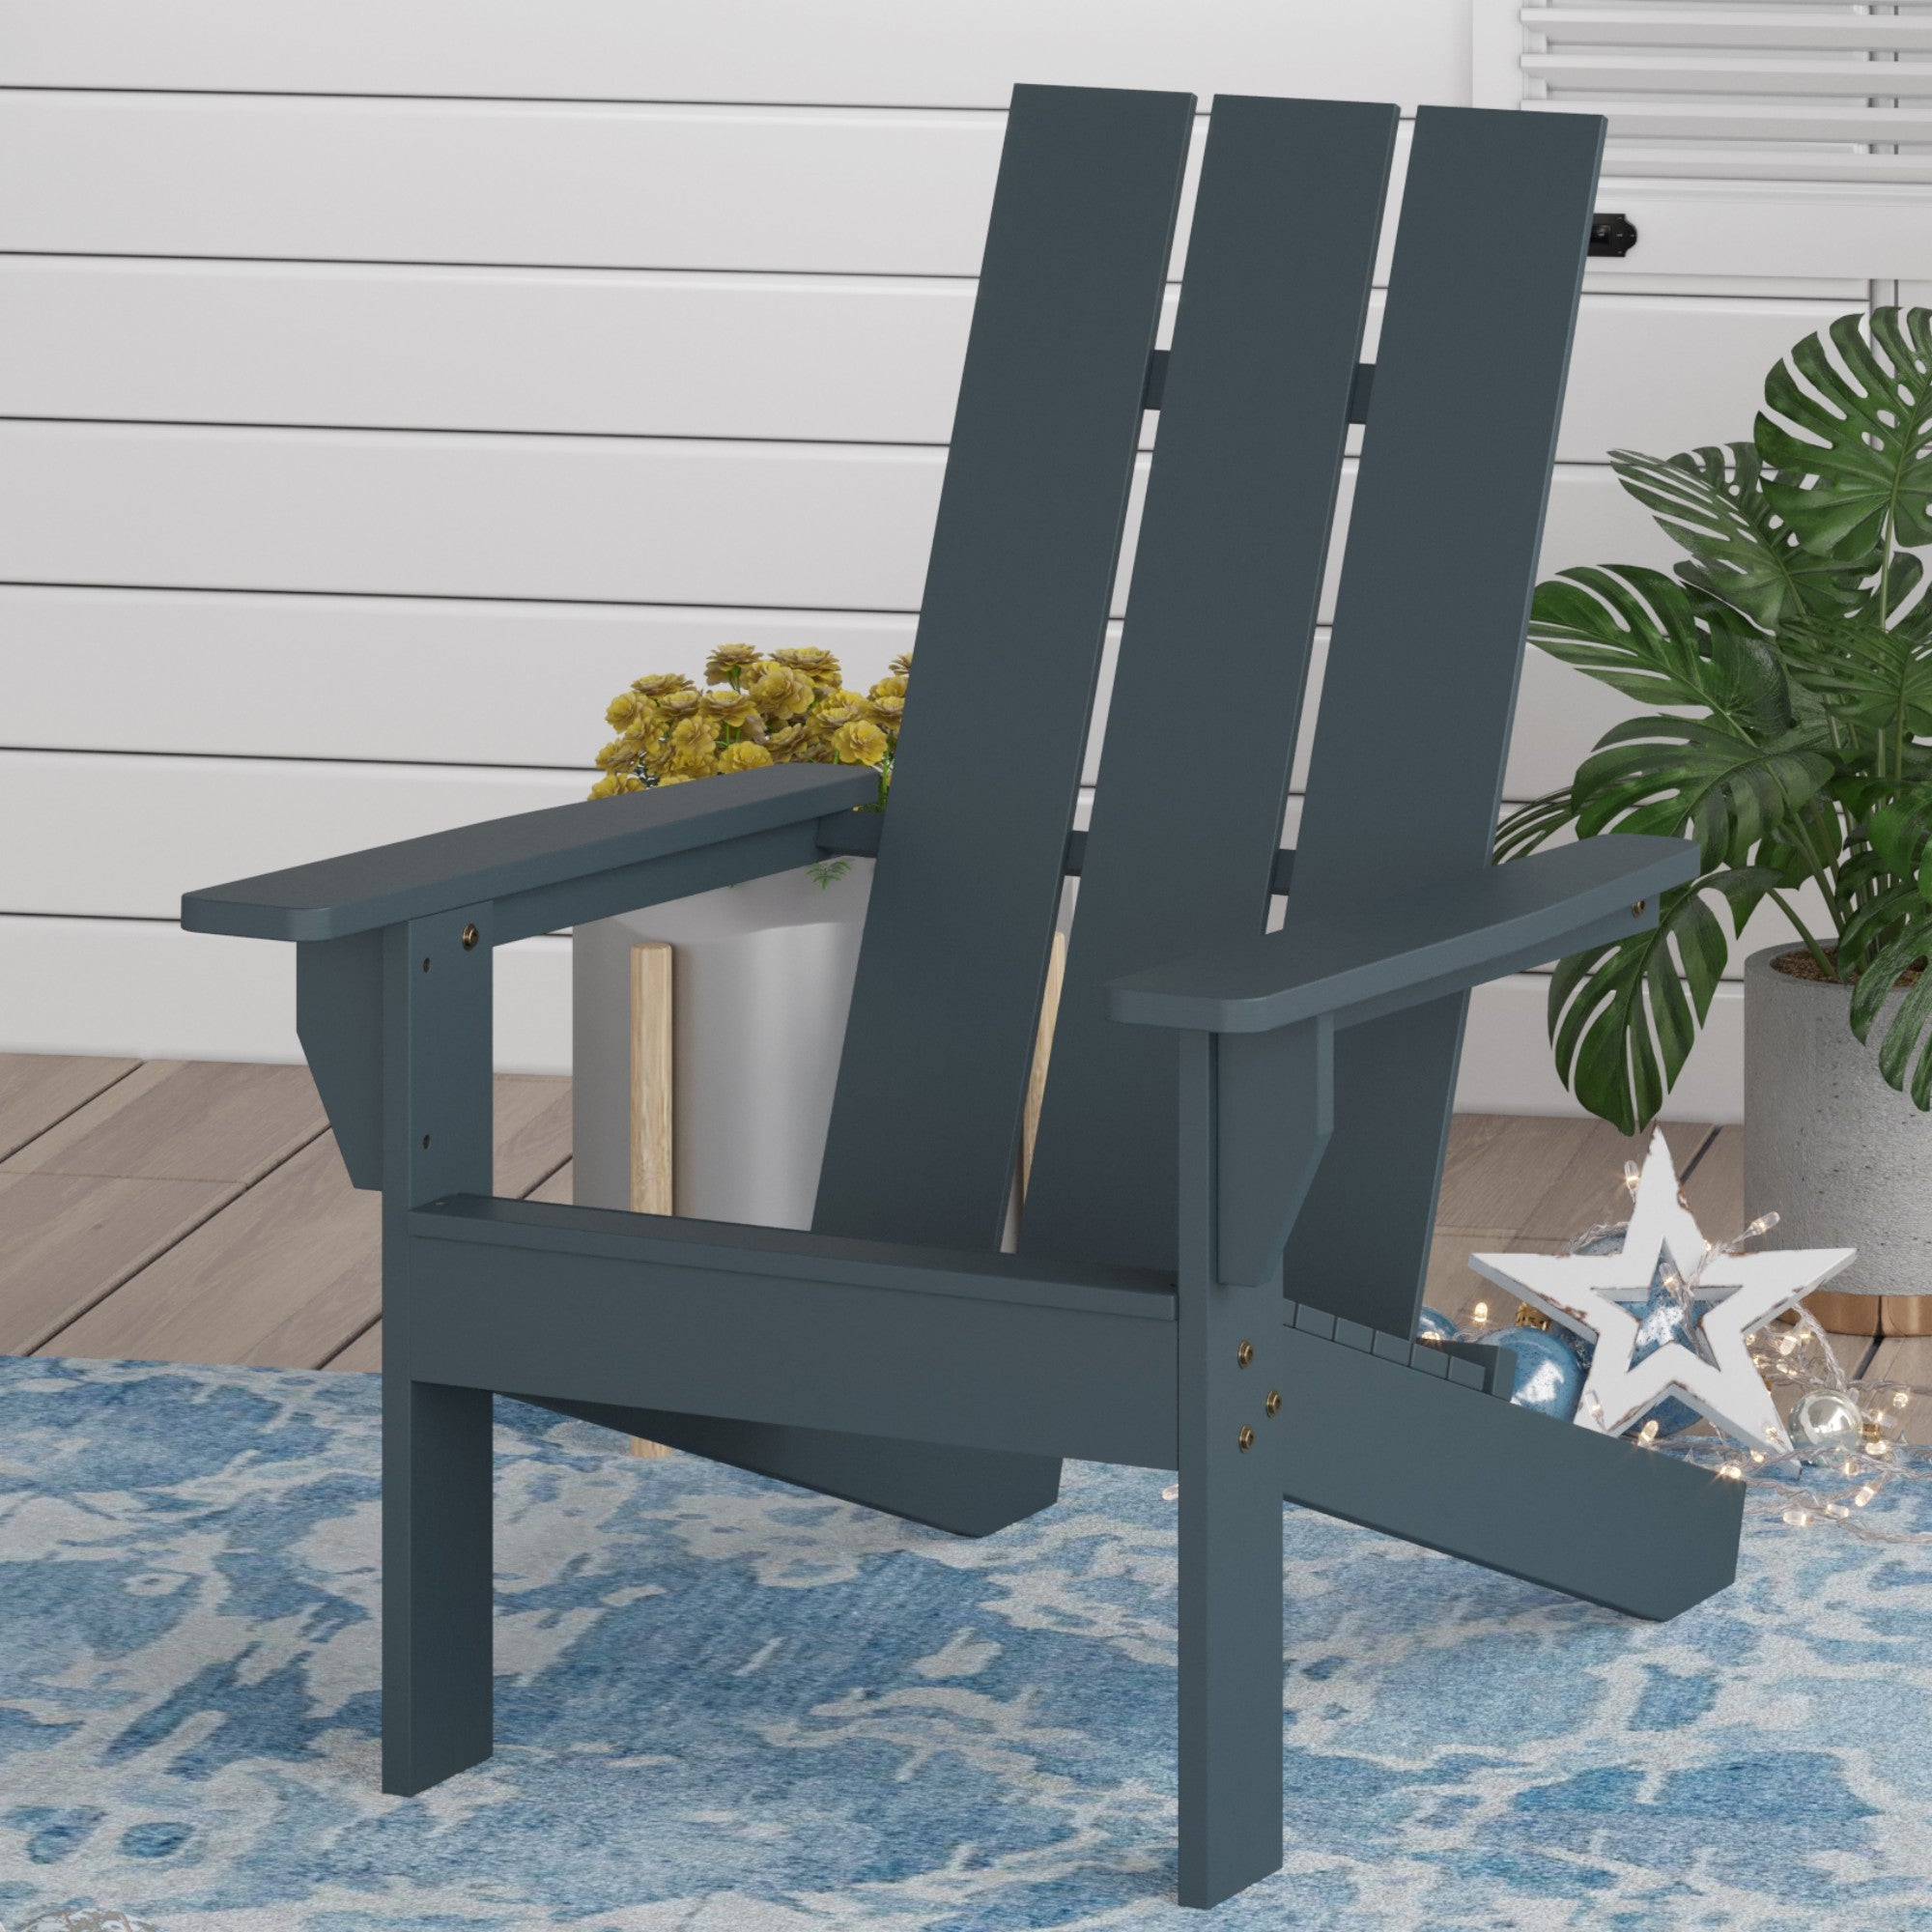 Sophia & William Grey Patio Wooden Adirondack Chair Lounge Chair for Garden Beach Balcony Backyard Lawn - image 1 of 5